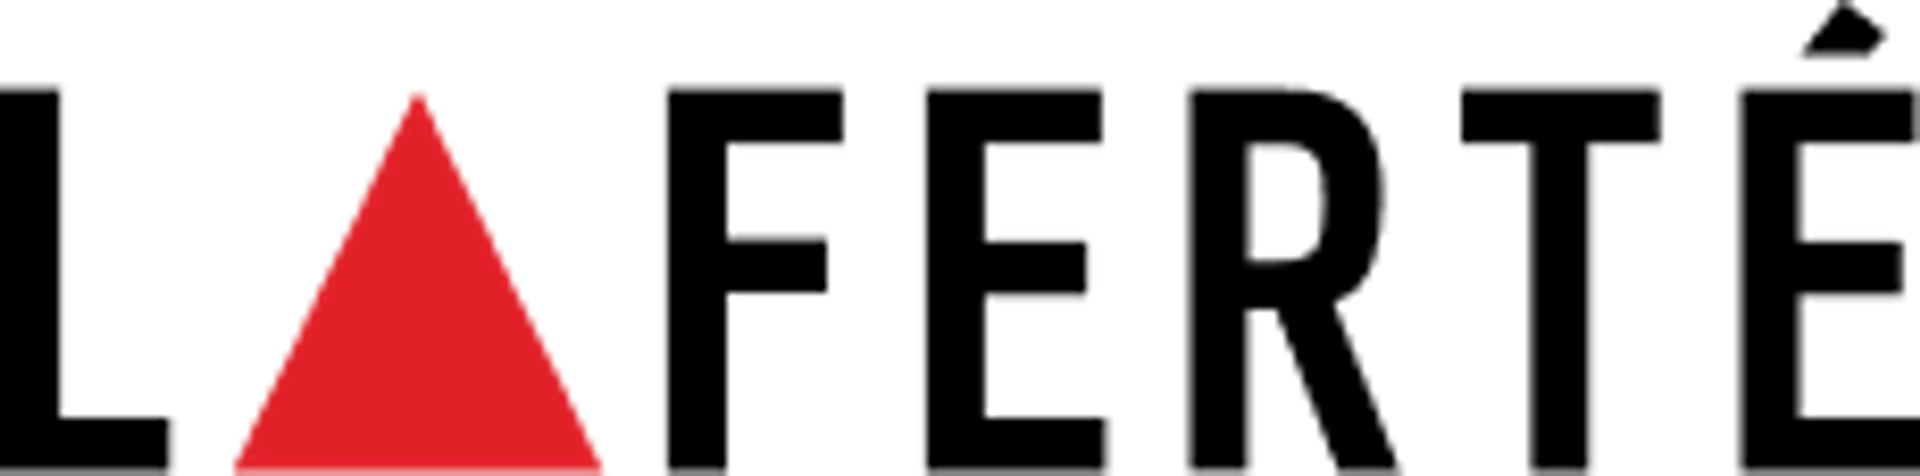 LAFERTÉ  logo de circulaires